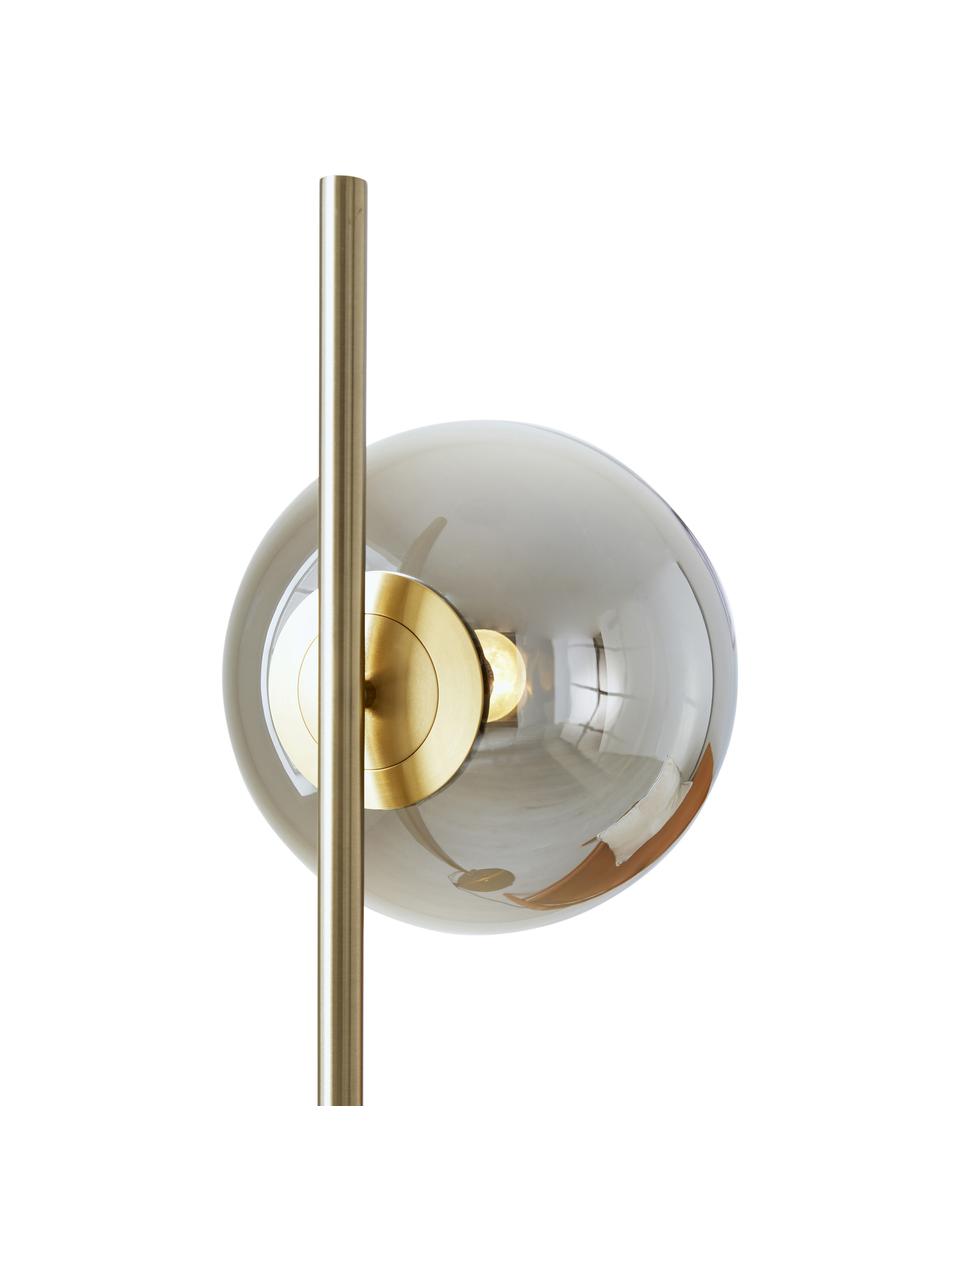 Stehlampe Dione aus Rauchglas, Lampenschirm: Rauchglas, Lampenfuß: Metall, vermessingt, Messingfarben, Grau, H 135 cm